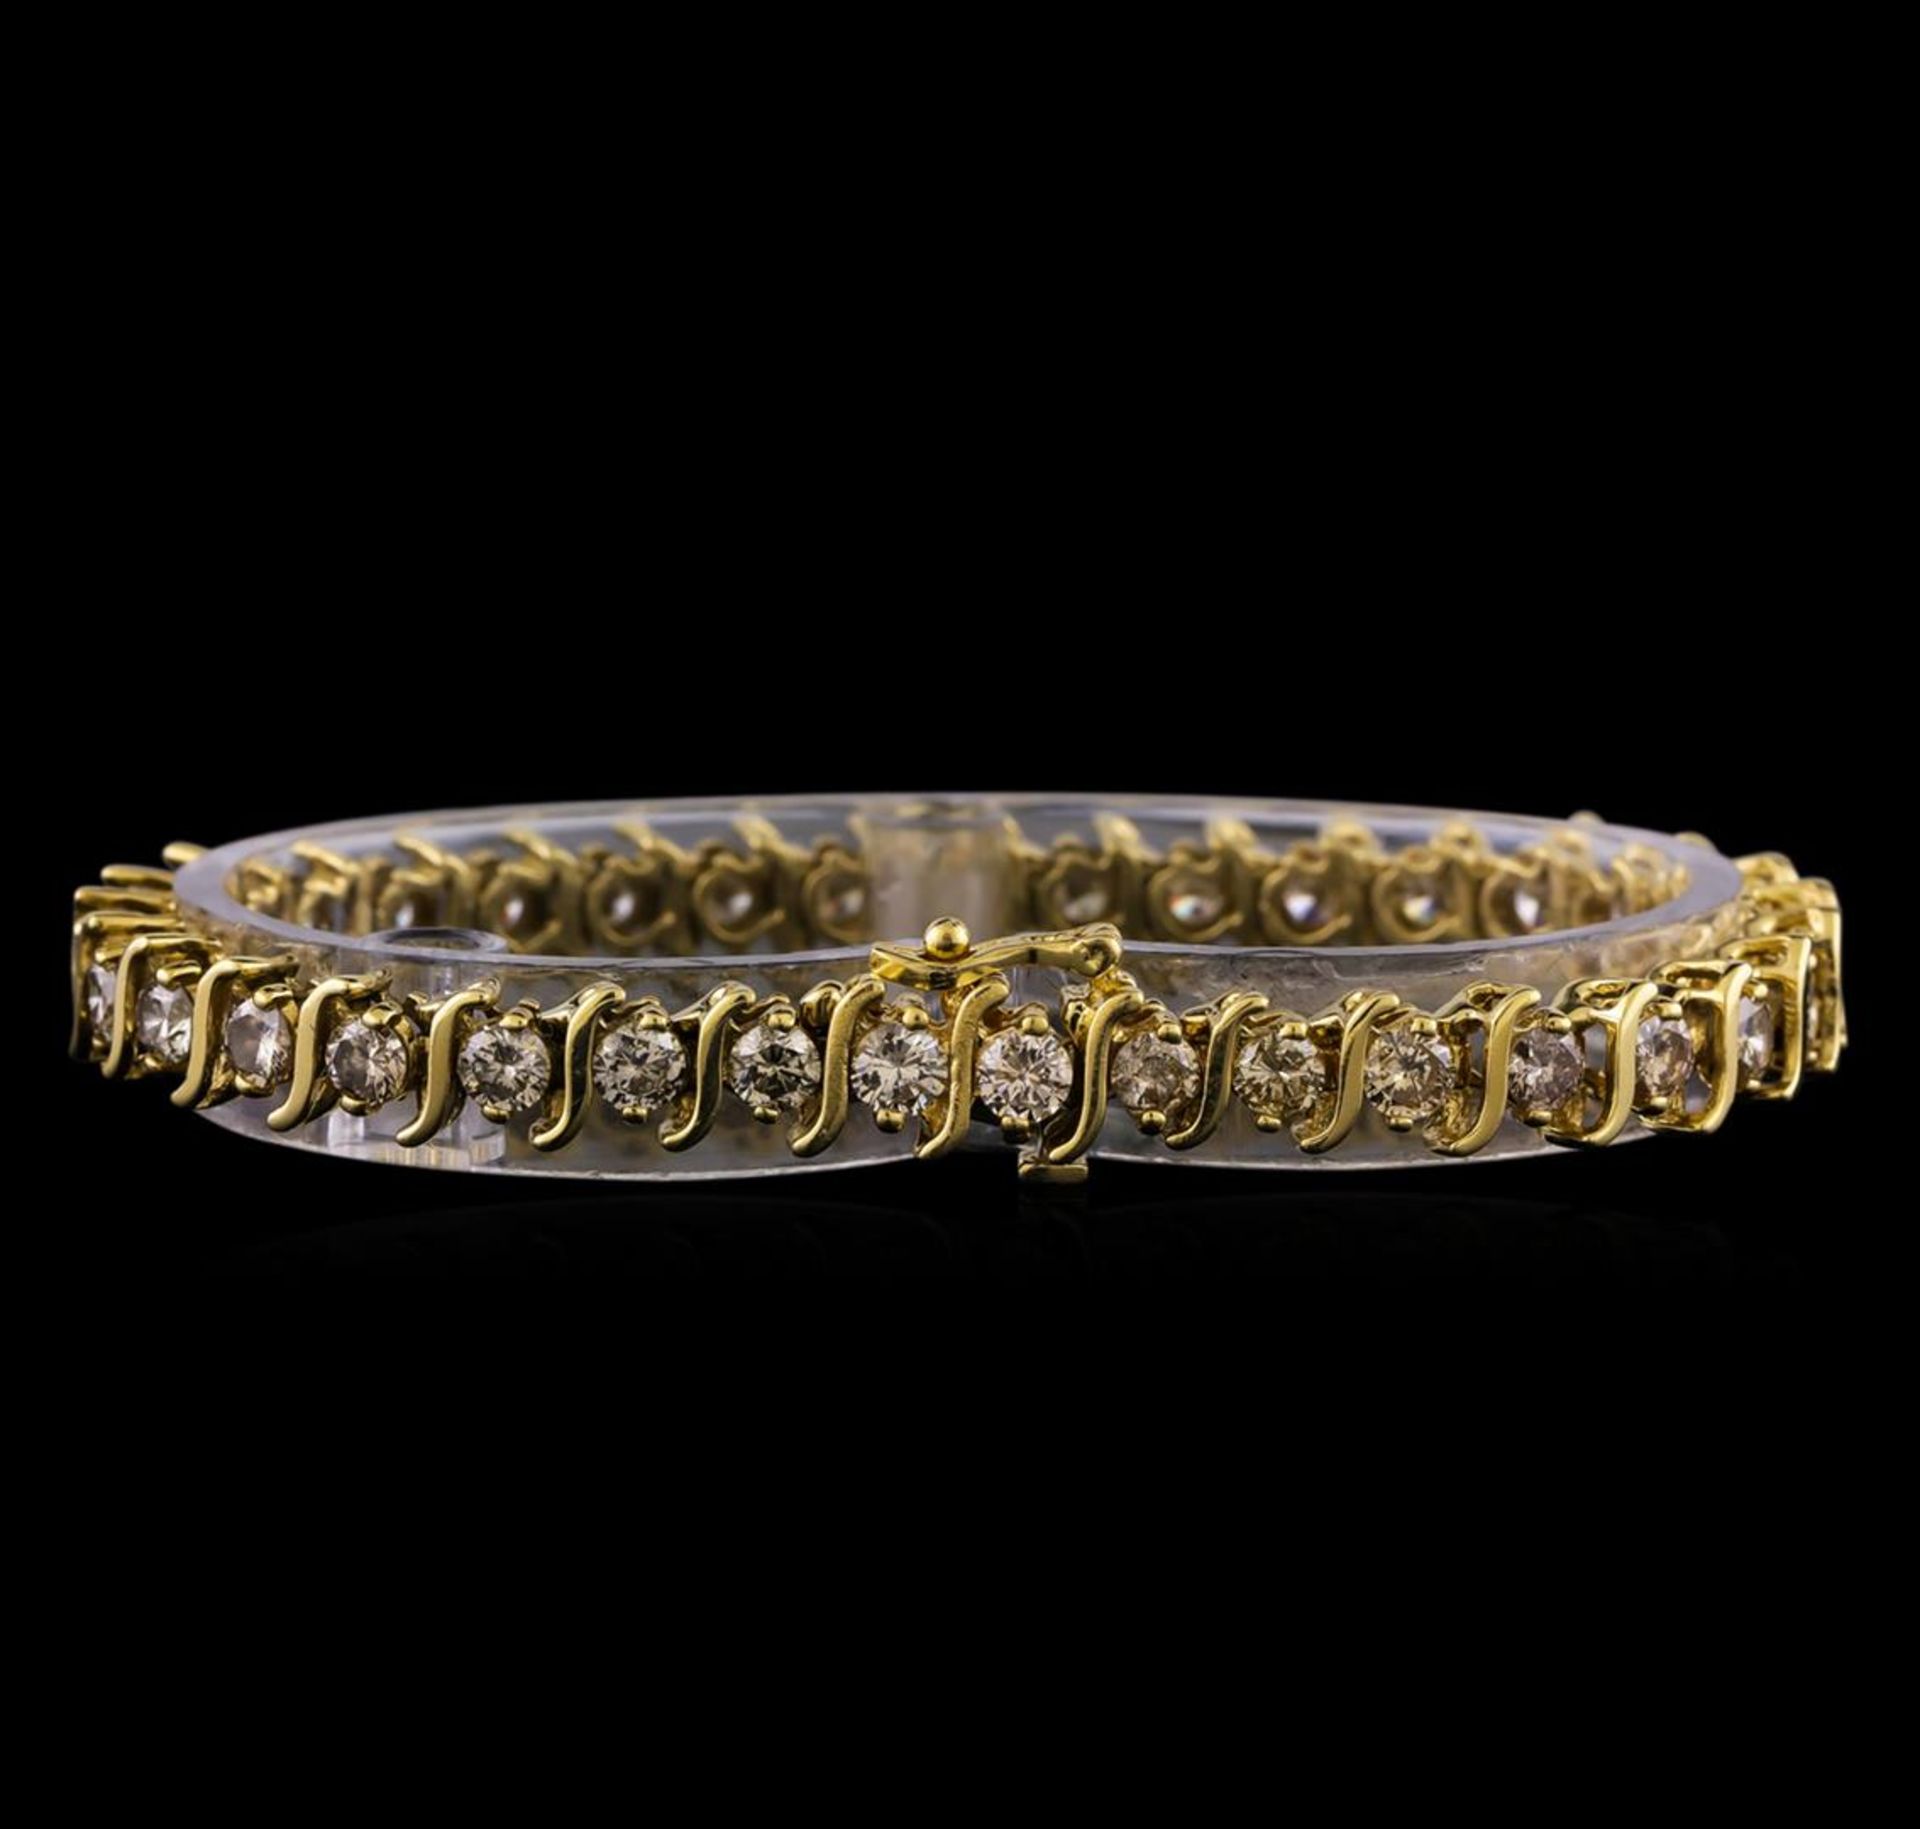 7.13 ctw Diamond Bracelet - 14KT Yellow Gold - Image 2 of 4